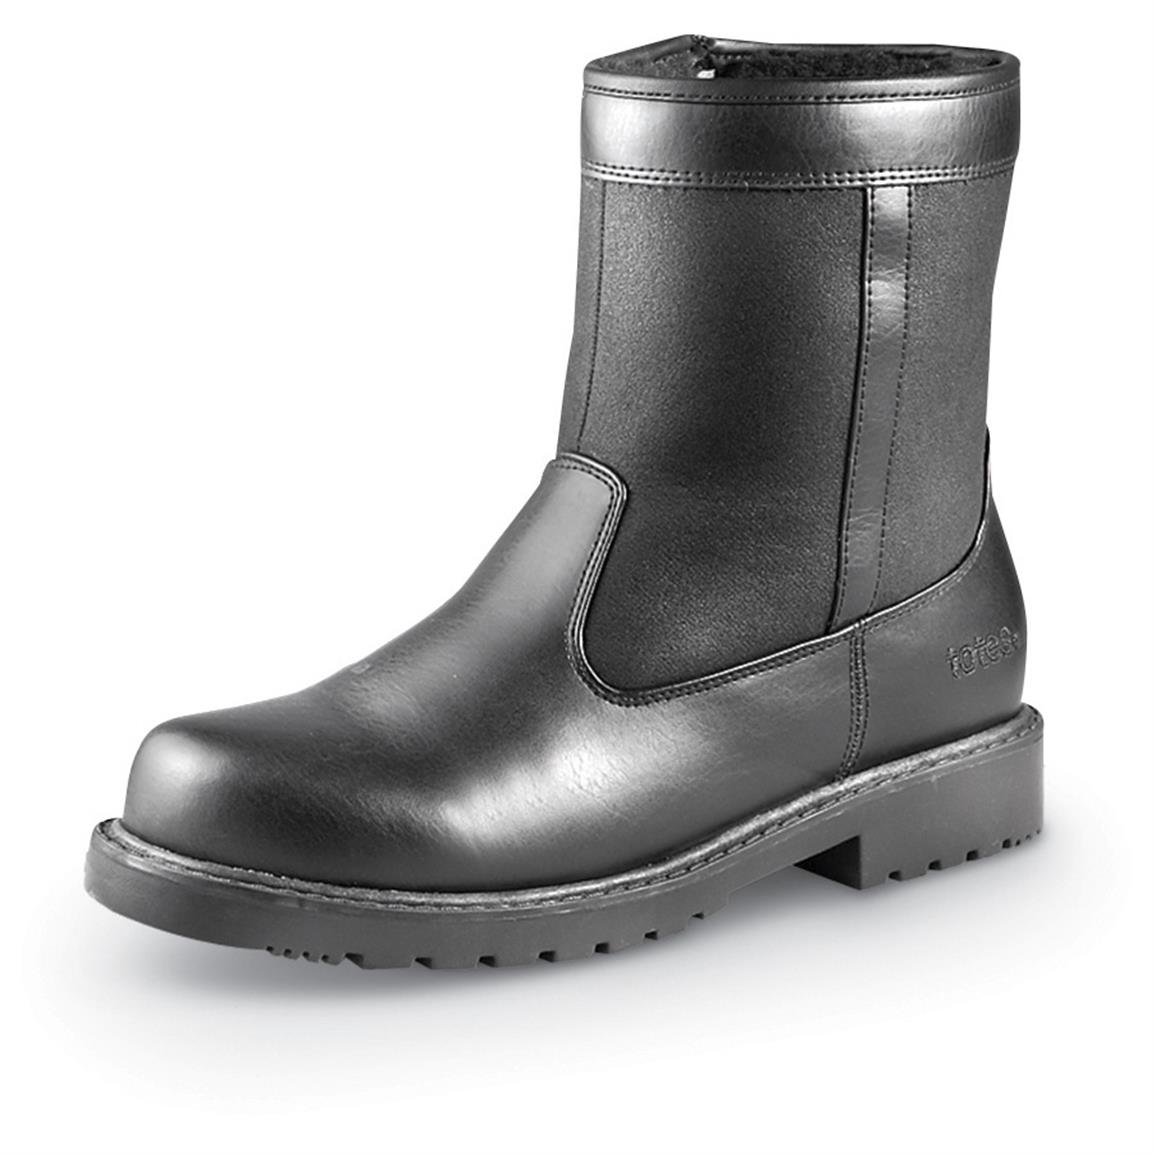 Totes Men's Side-Zip Stadium Boots, Black - 206275, Winter & Snow Boots ...